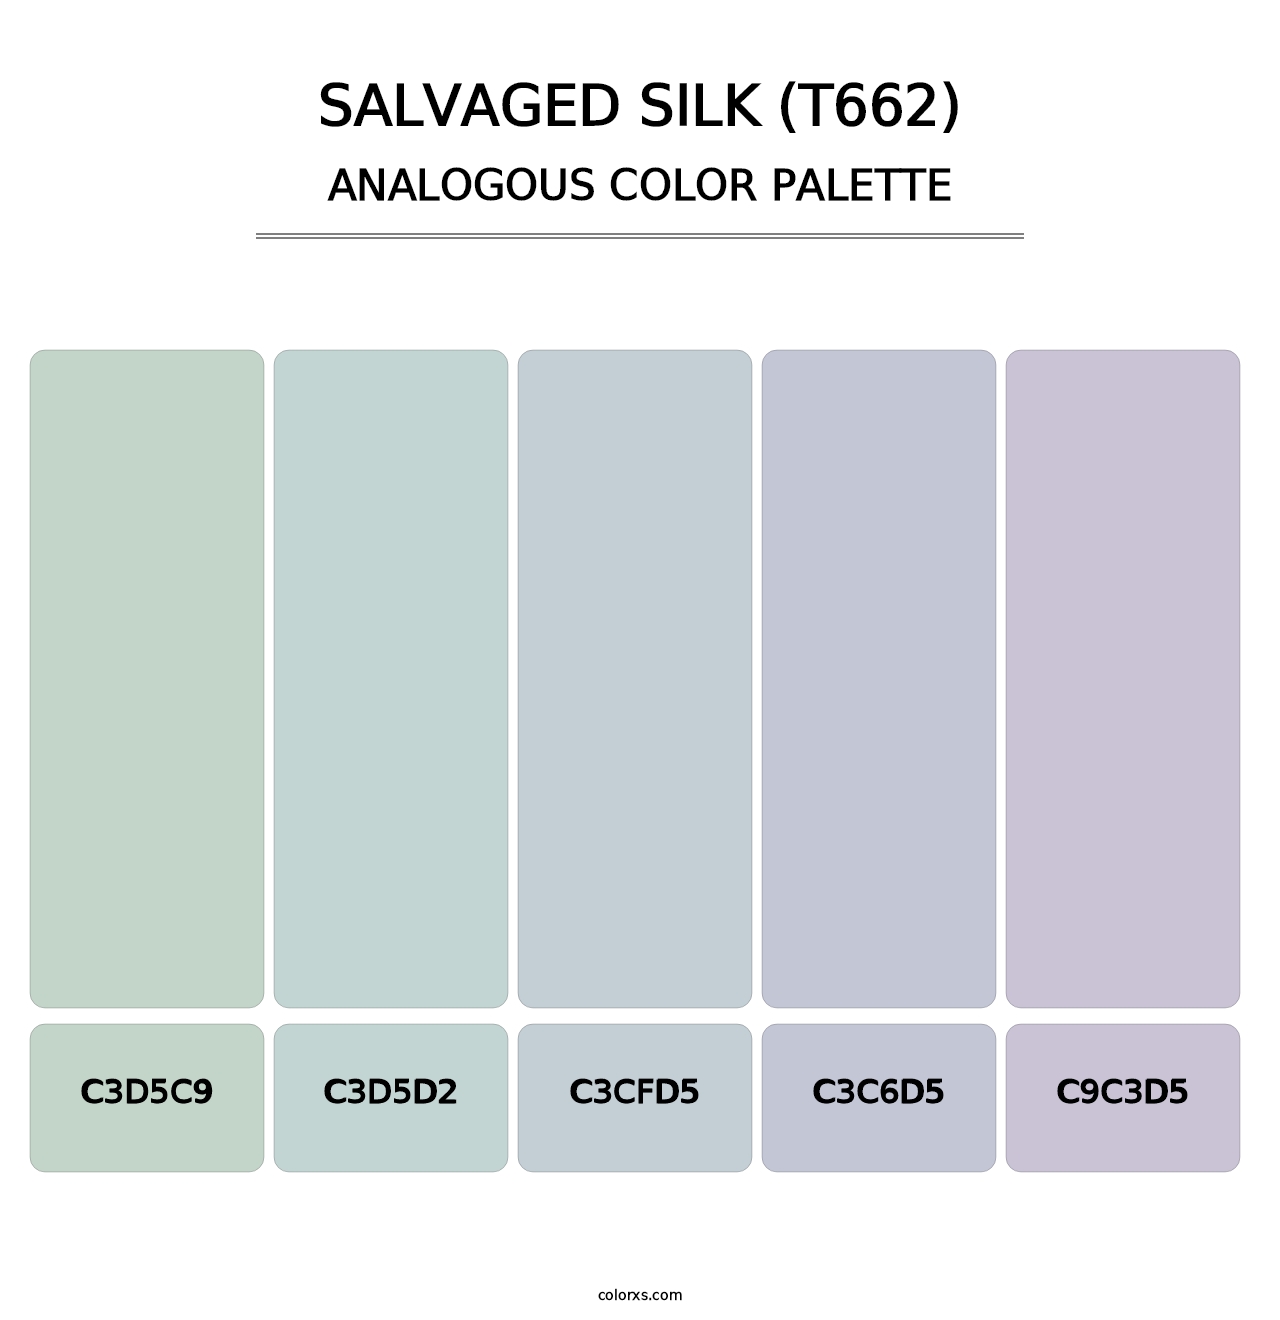 Salvaged Silk (T662) - Analogous Color Palette